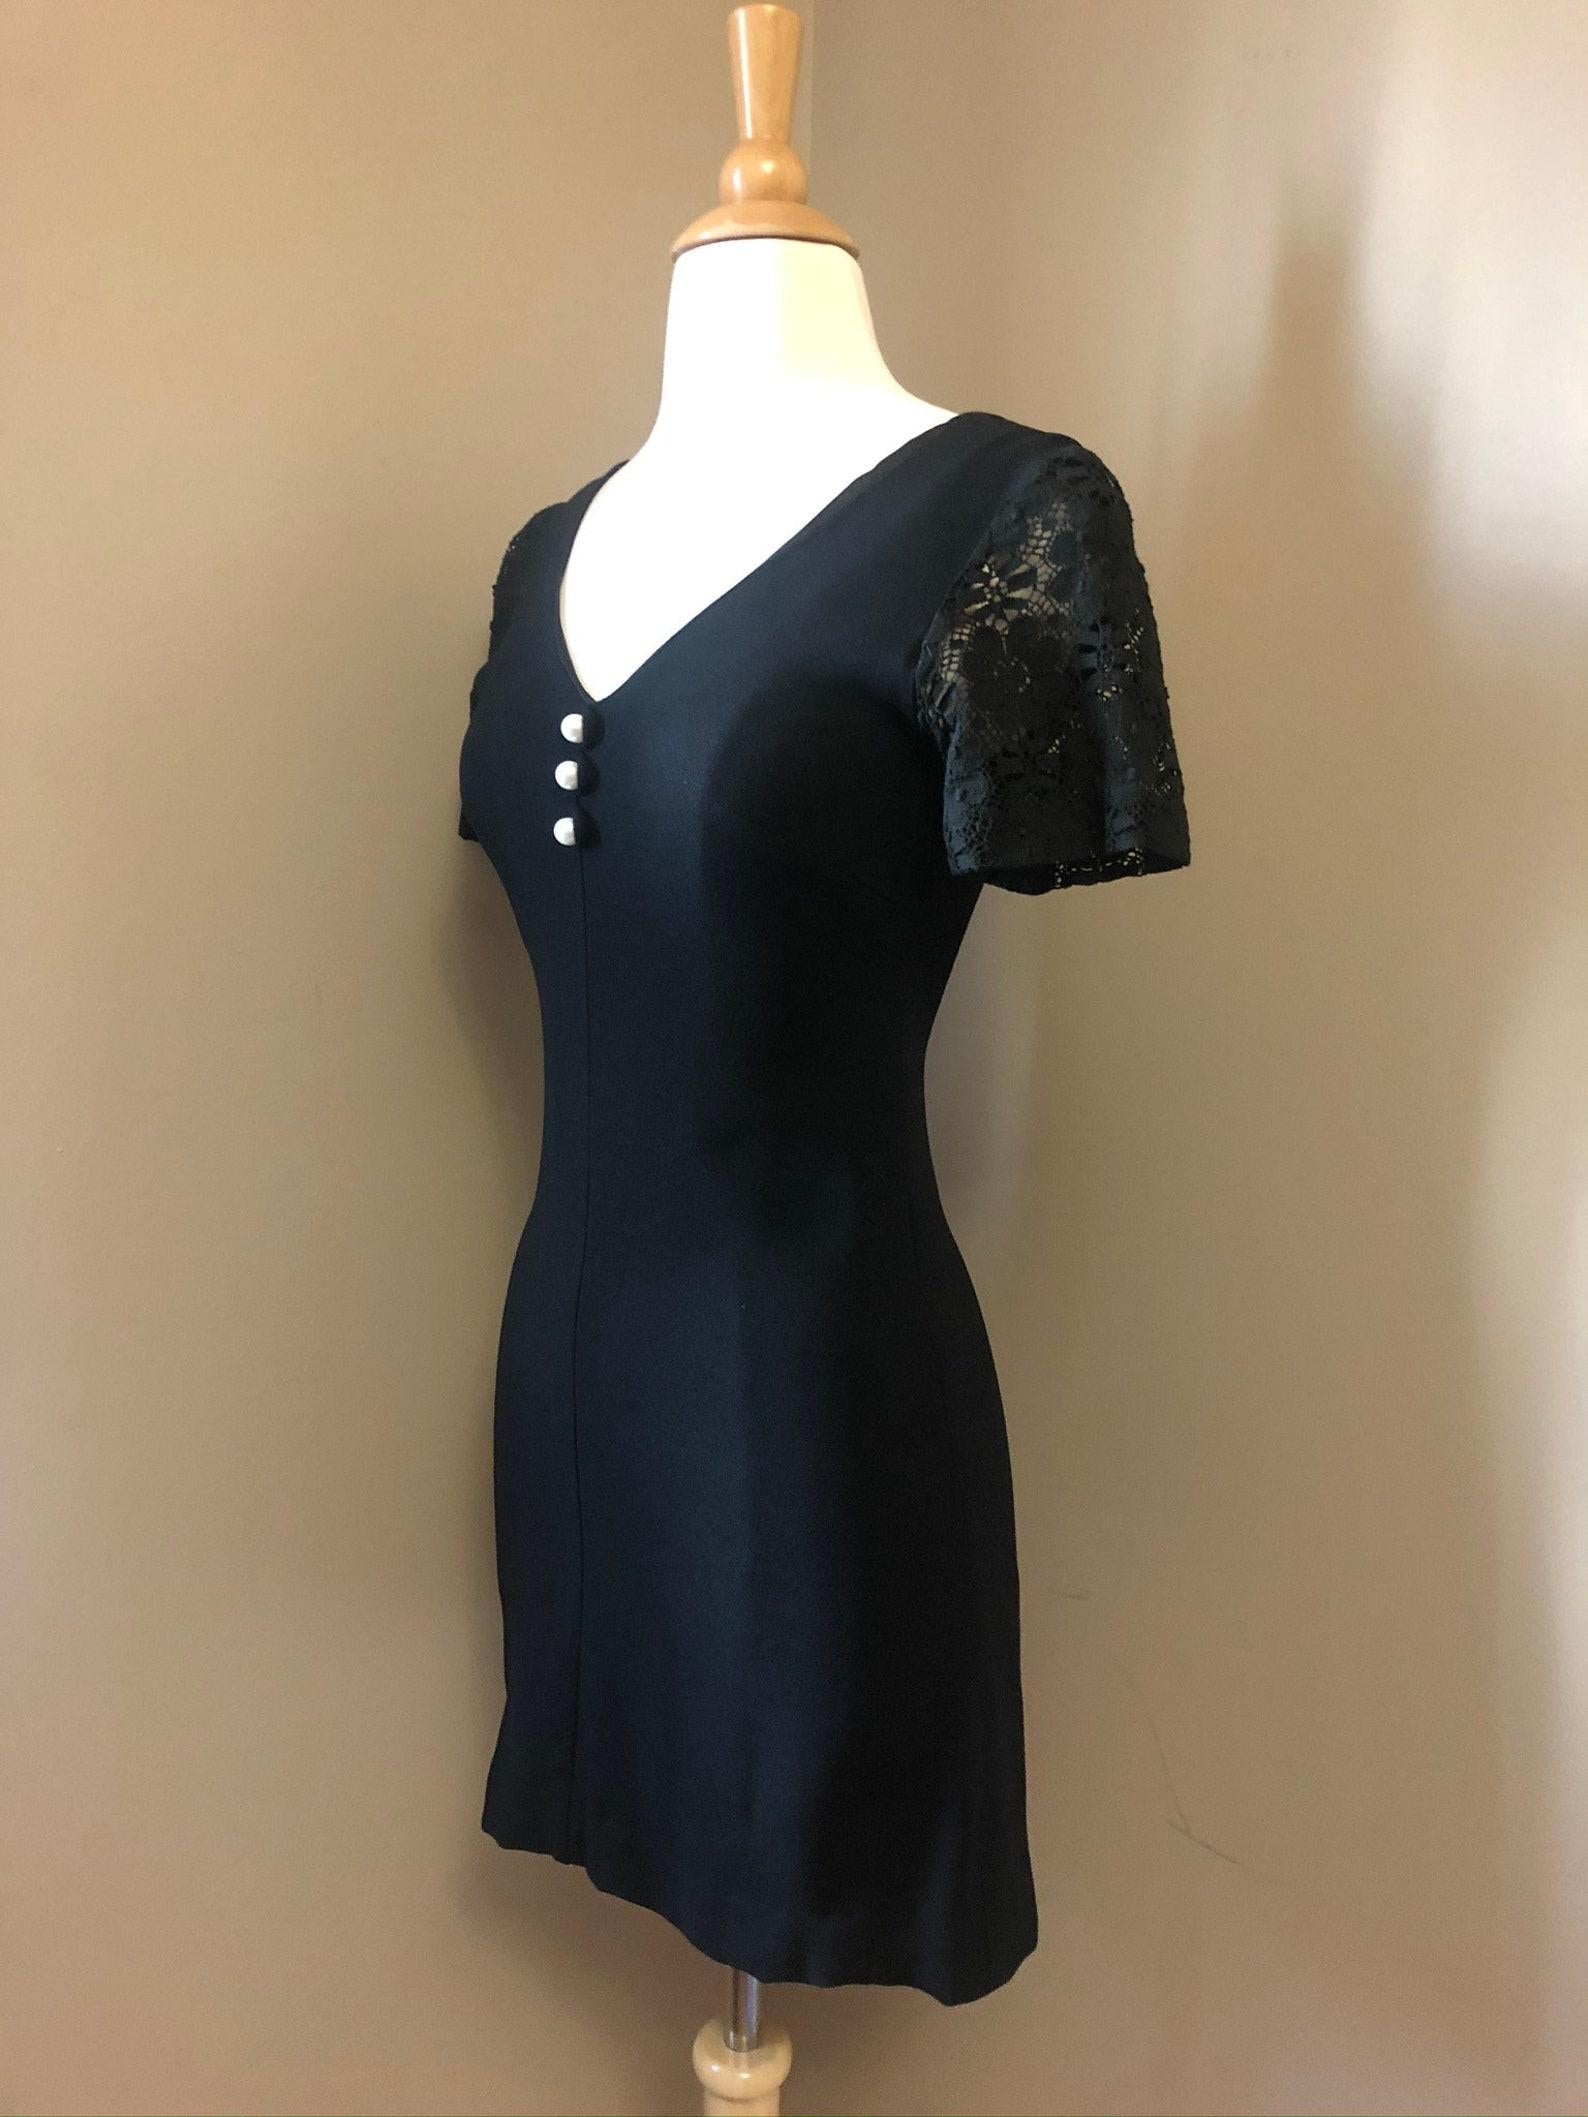 Radley of London Black Mini Dress, Circa 1960s For Sale 1